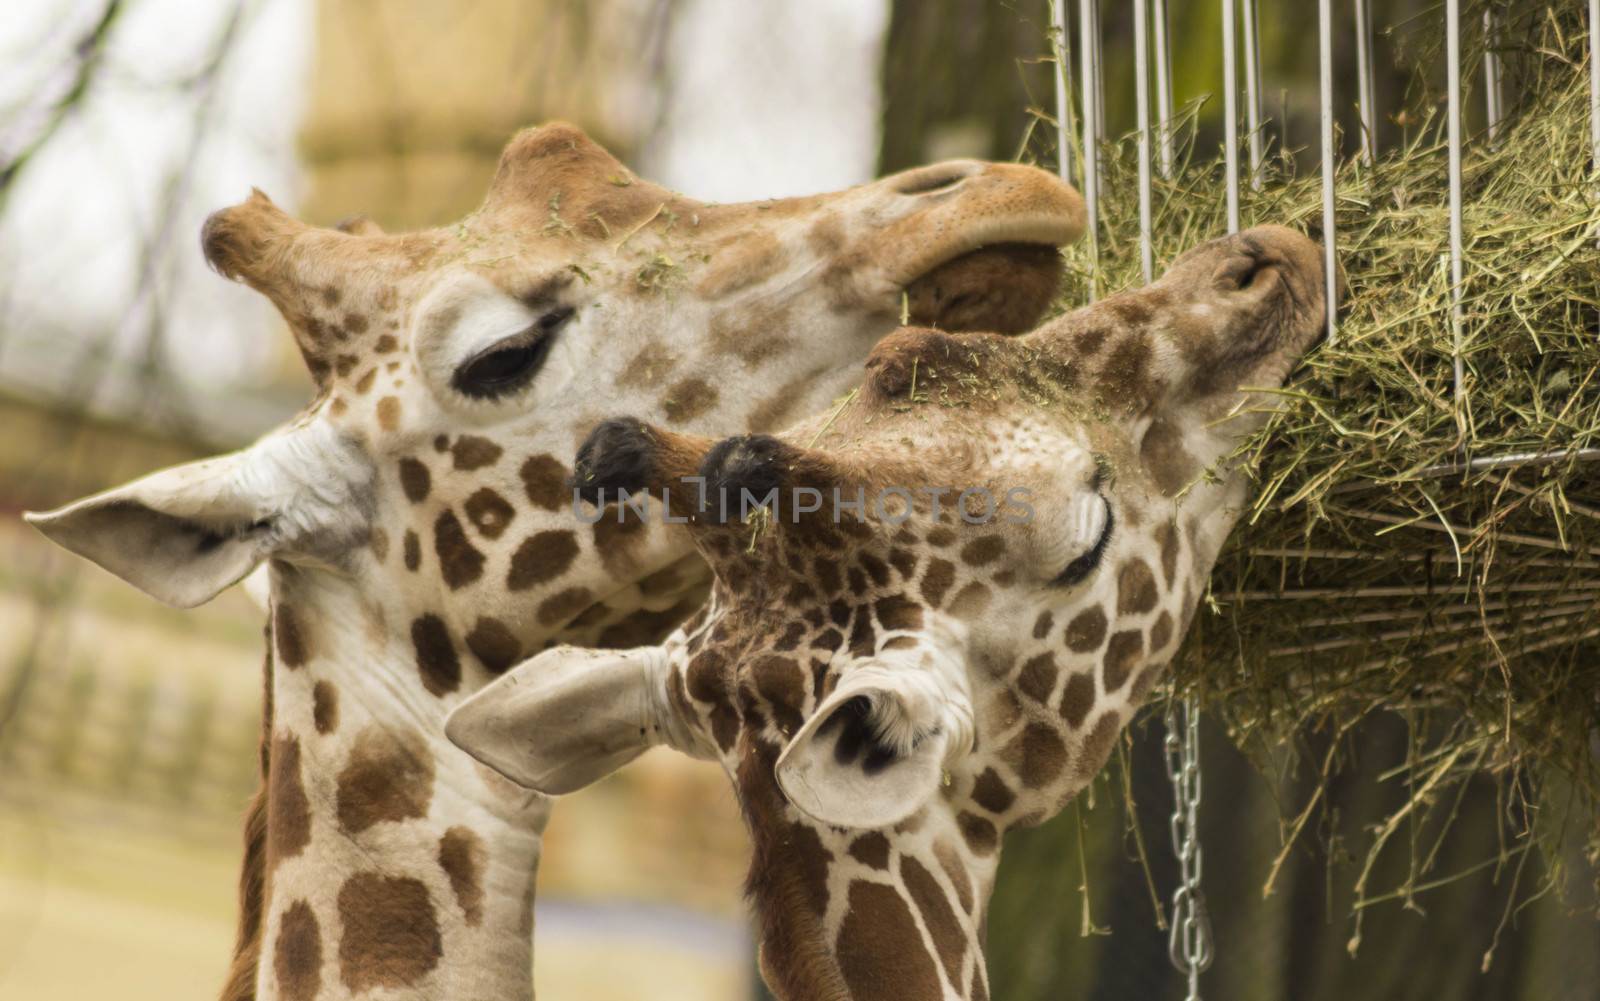 Two giraffes eating grass in Berlin zoo.